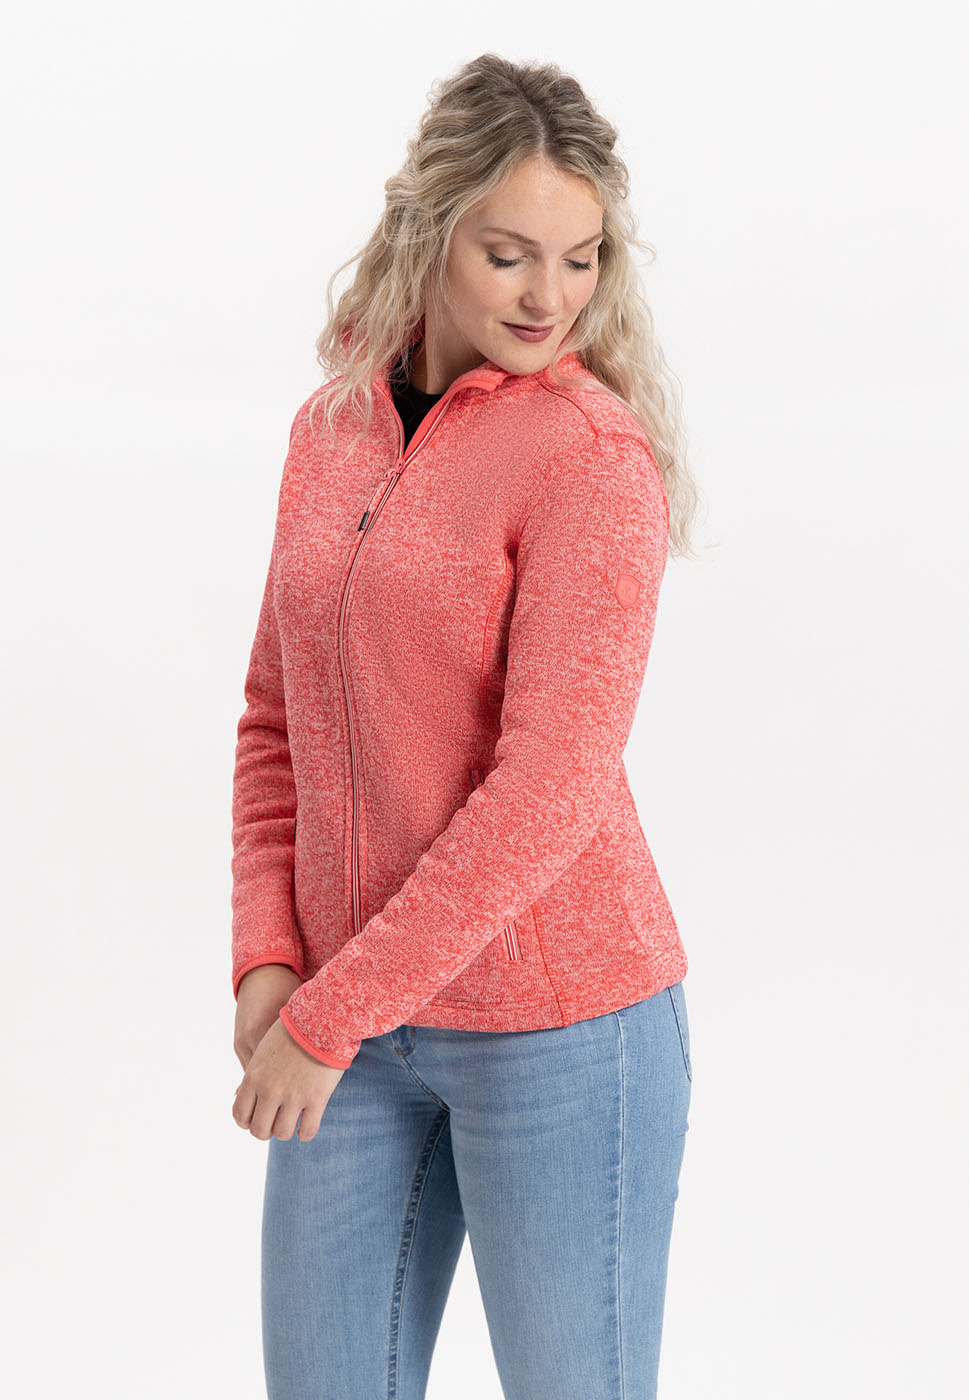 Kjelvik Scandinavian Clothing - Women Knitwear Alexa Pink